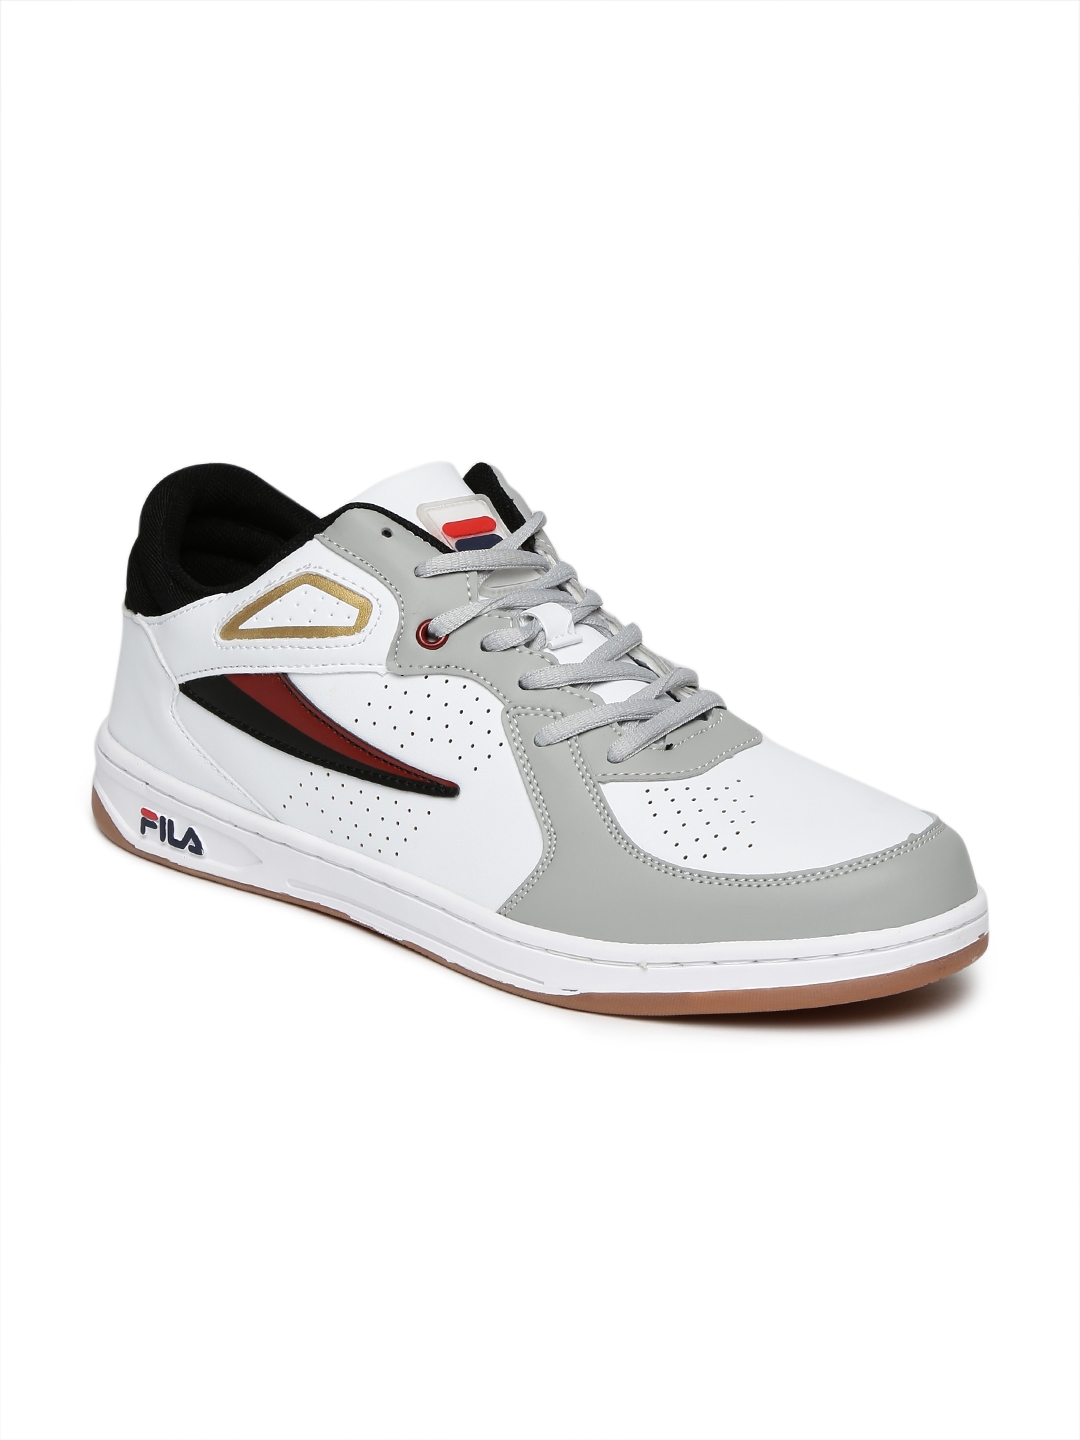 Buy Fila Cross 2 Plus White Sneakers for Men at Best Price @ Tata CLiQ